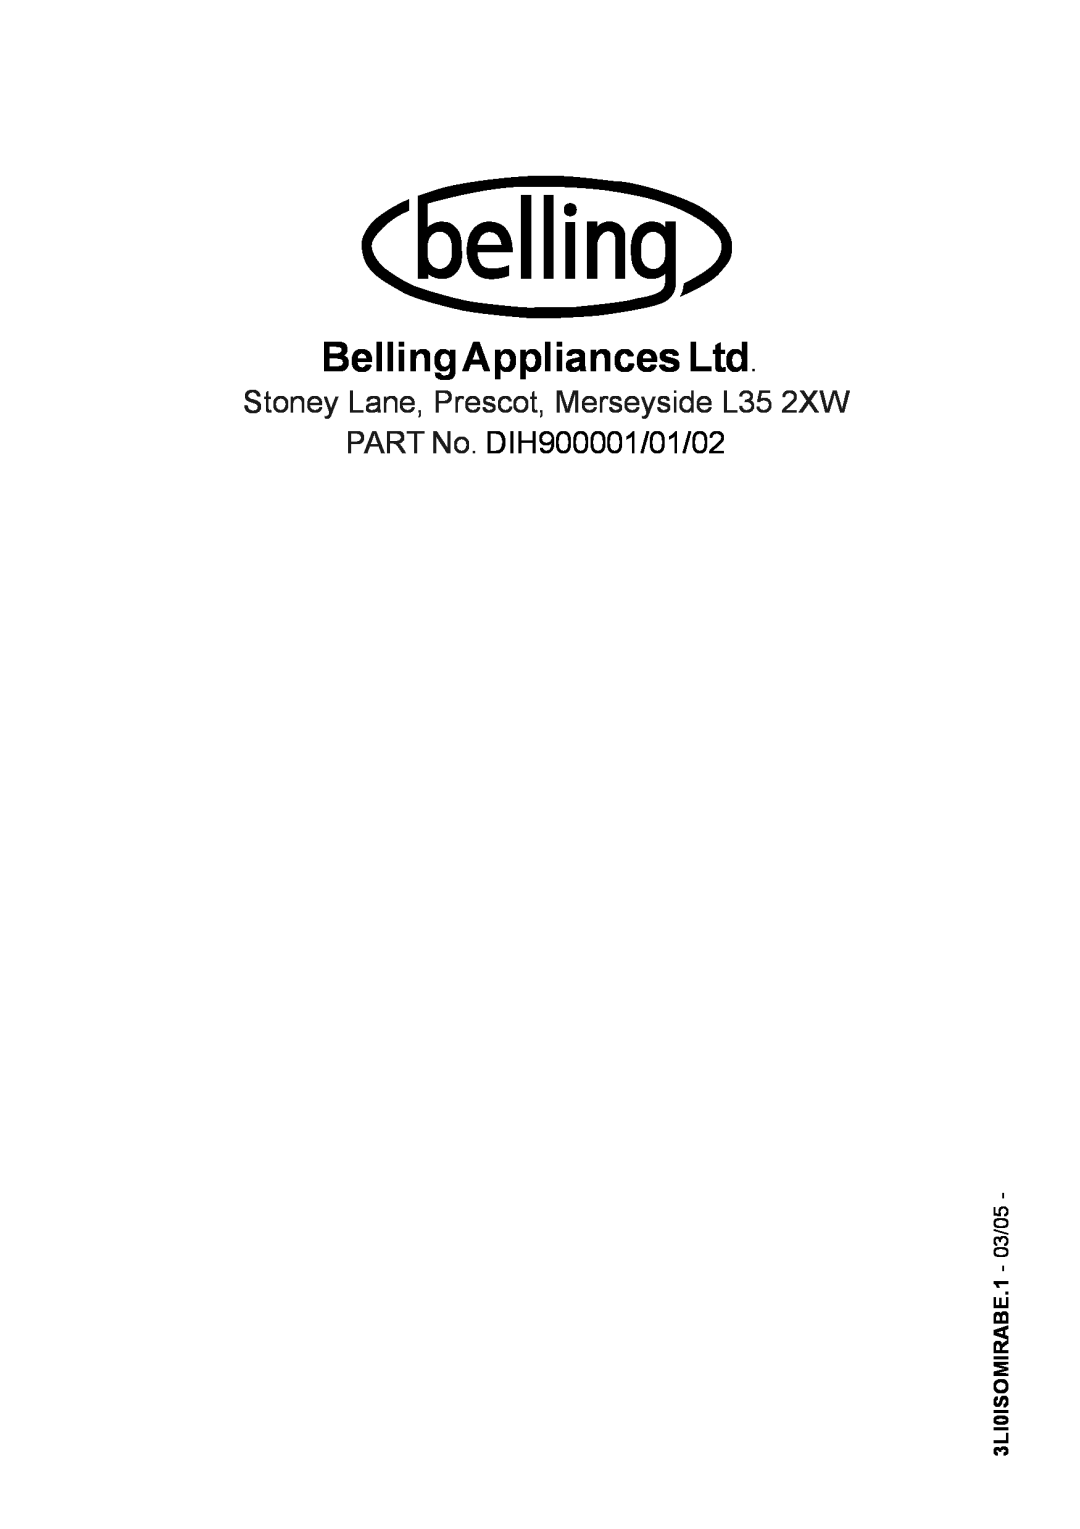 Glen Dimplex Home Appliances Ltd DIH900 manual Belling Appliances Ltd, Stoney Lane, Prescot, Merseyside L35 2XW 